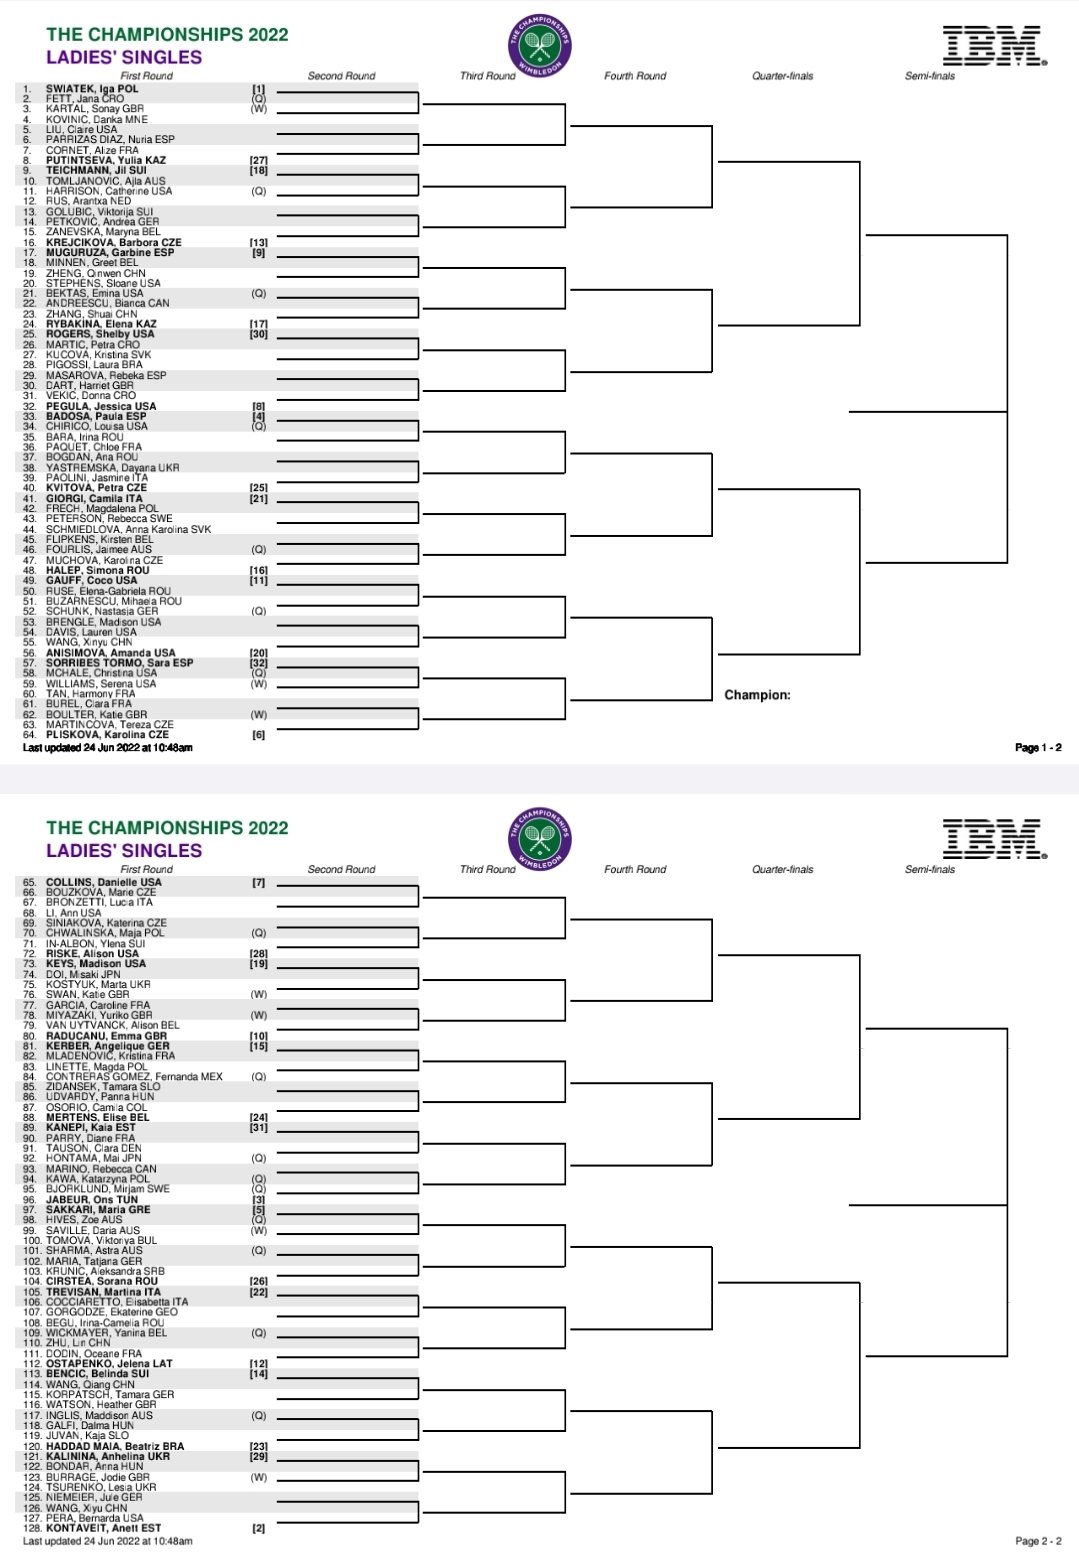 Mario Boccardi on X: Wimbledon main draw - women's singles https